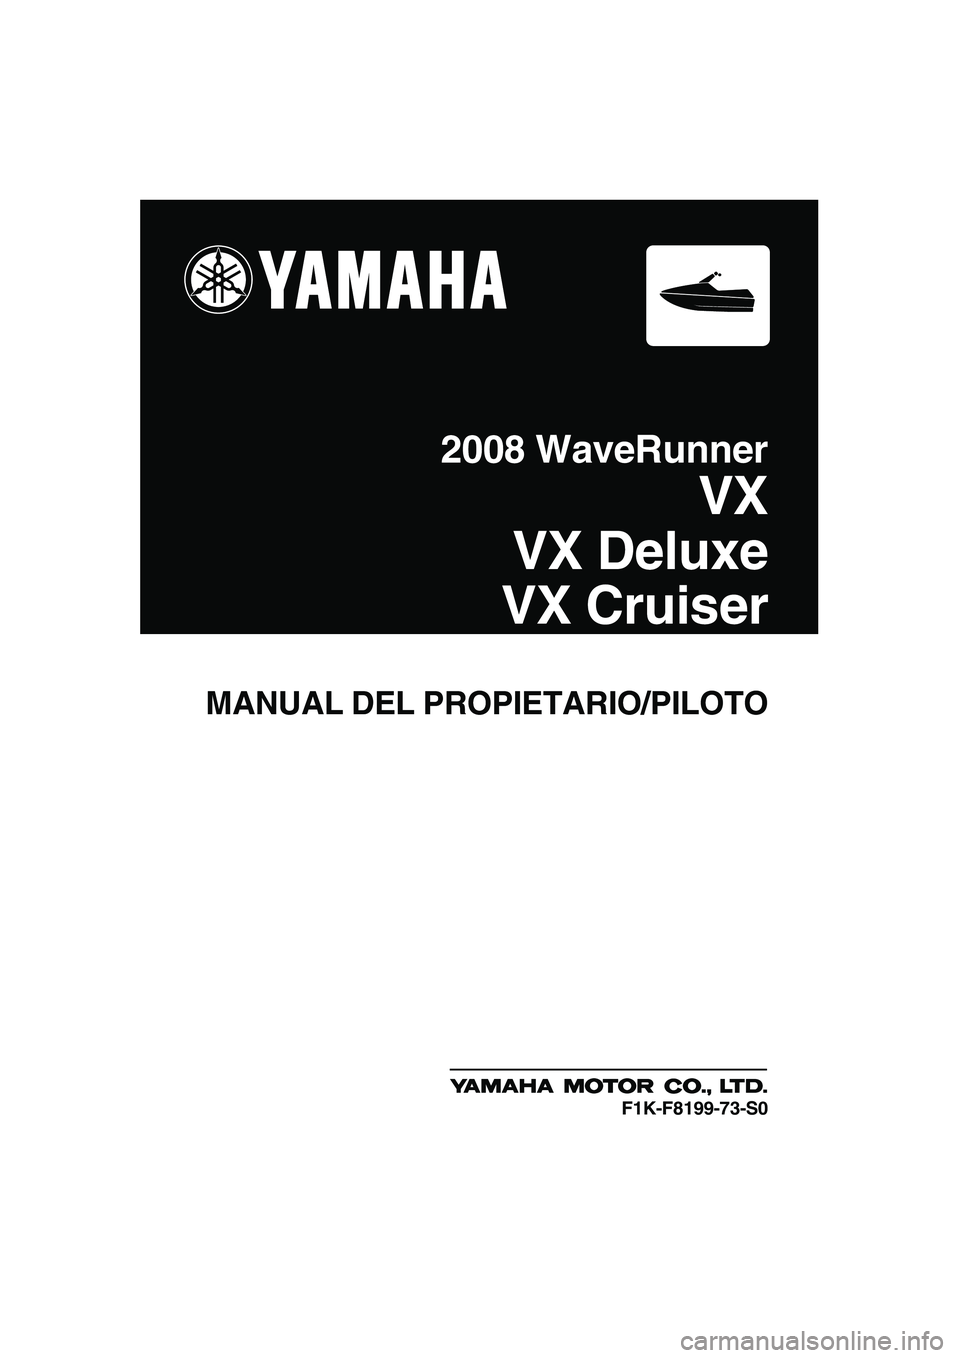 YAMAHA VX SPORT 2008  Manuale de Empleo (in Spanish) MANUAL DEL PROPIETARIO/PILOTO
2008 WaveRunner
VX
VX Deluxe
VX Cruiser
F1K-F8199-73-S0
UF1K73S0.book  Page 1  Tuesday, July 10, 2007  9:29 PM 